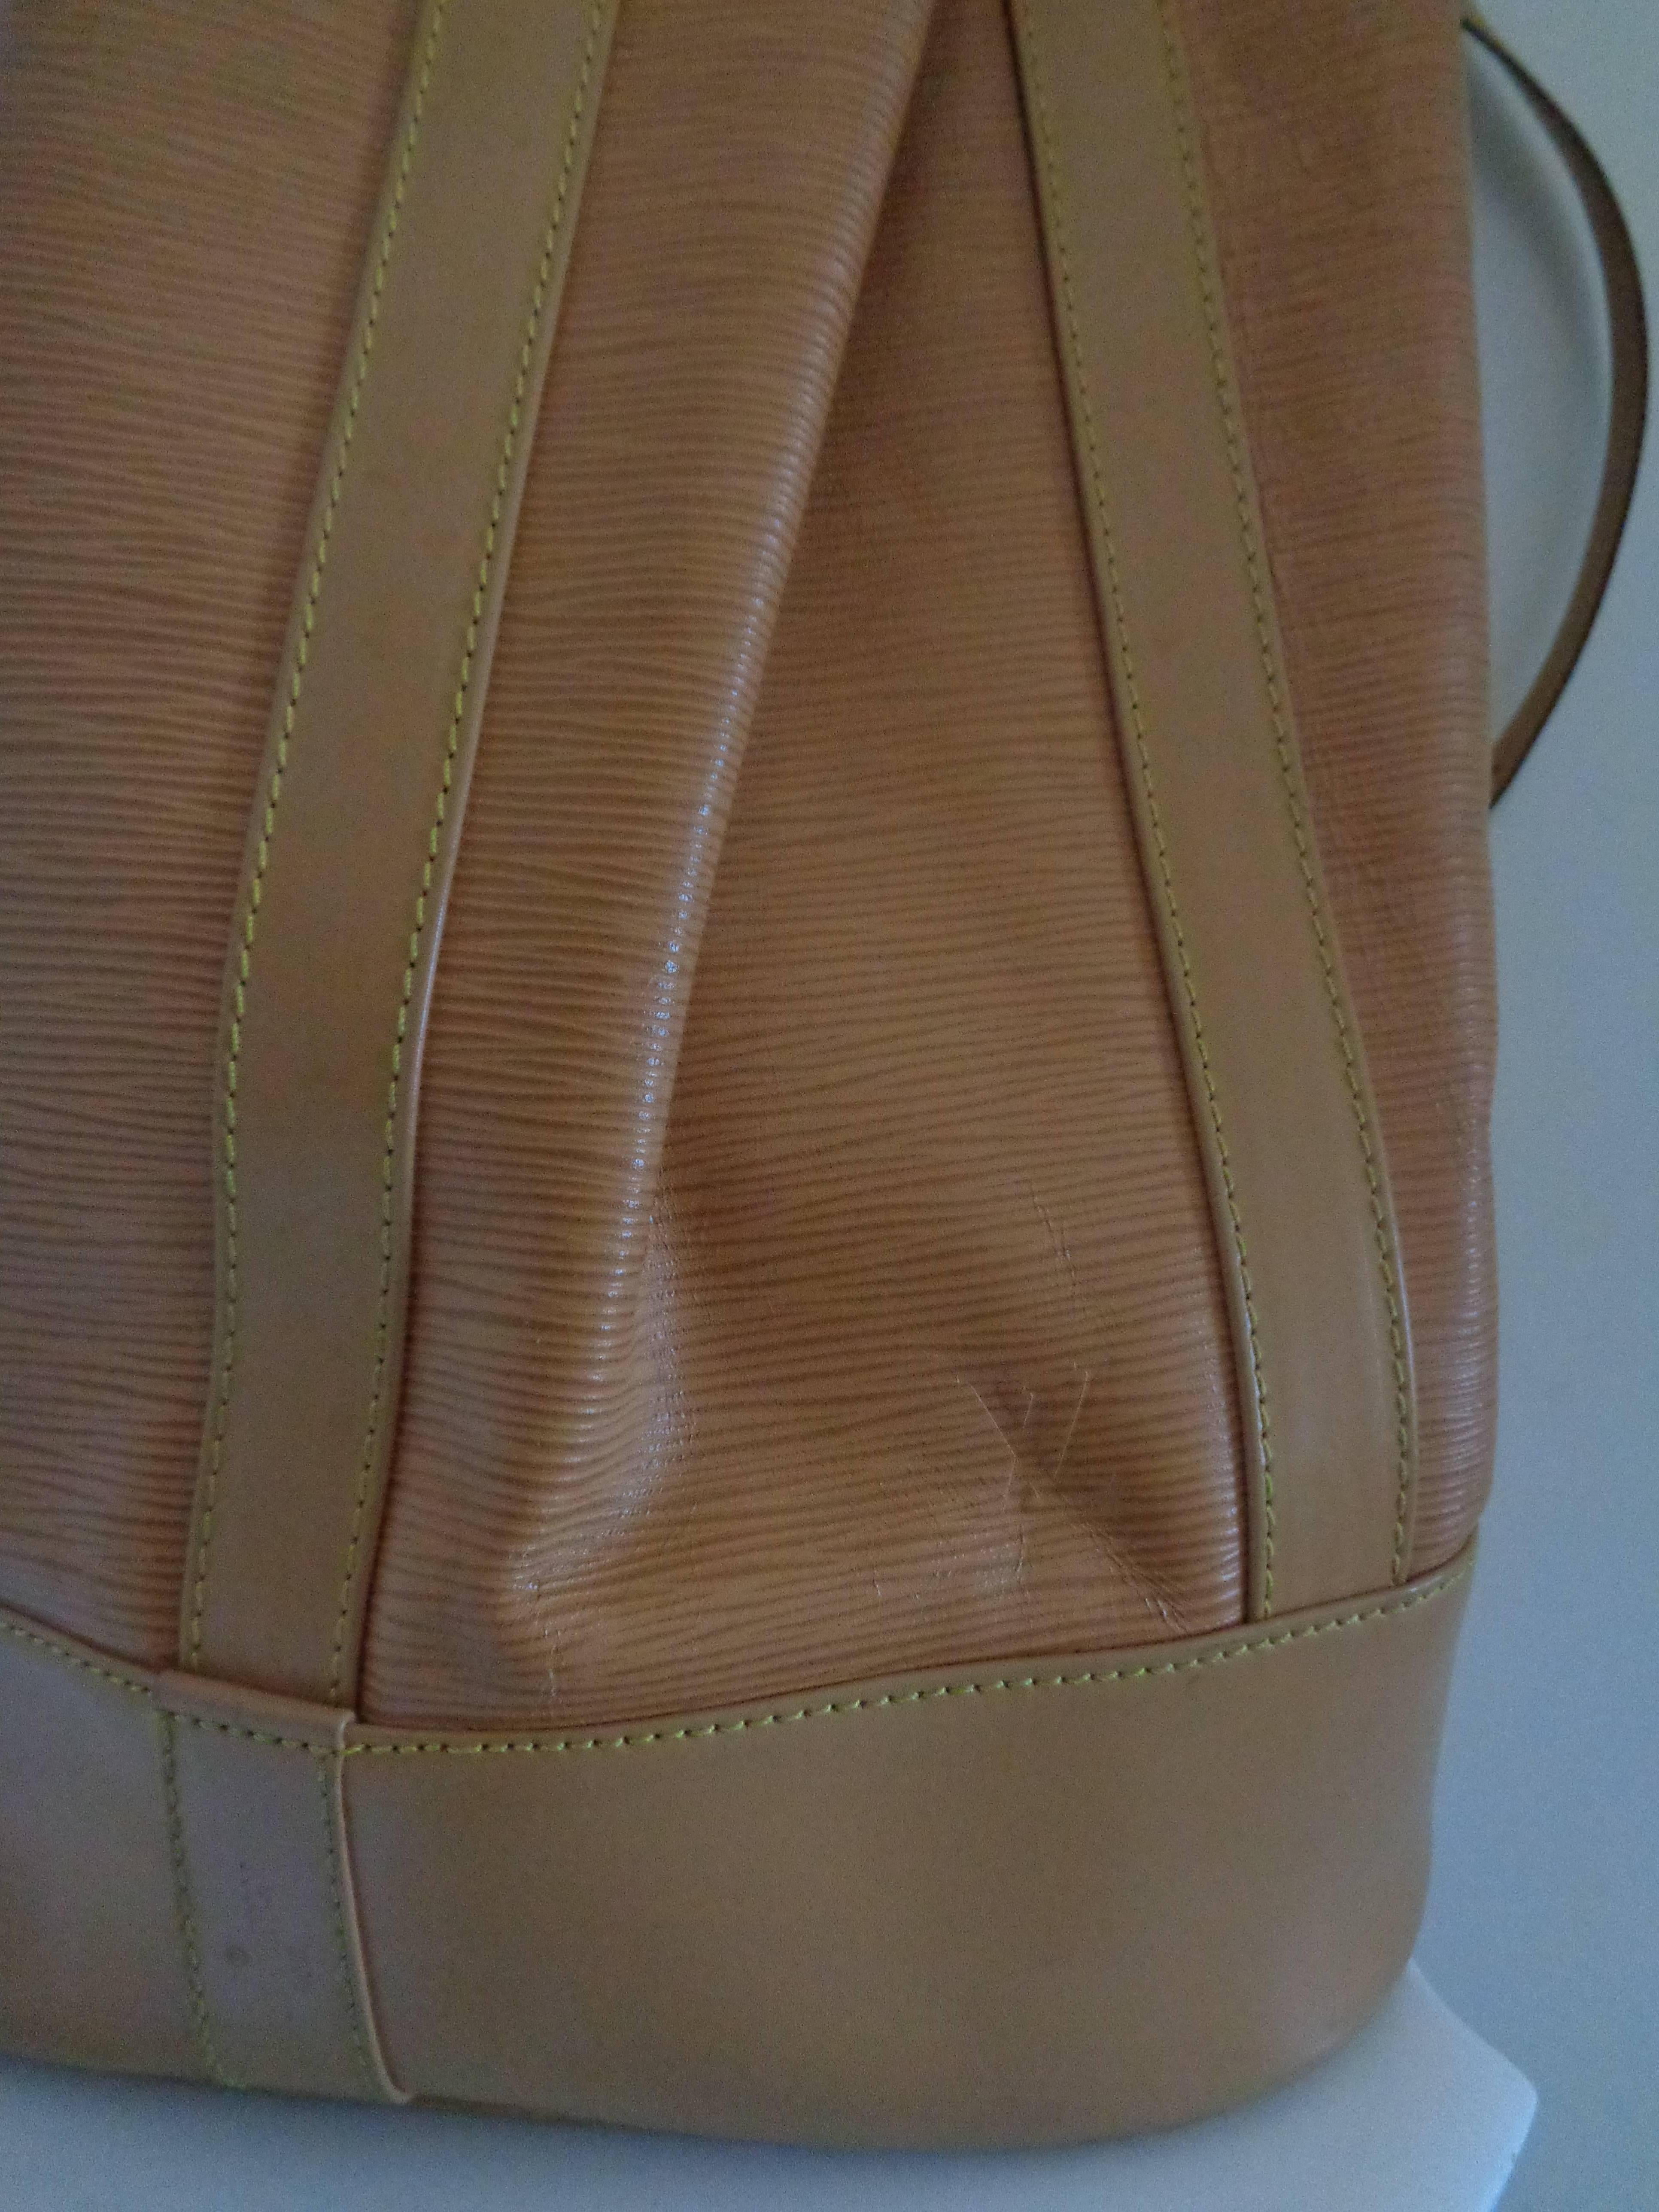 Louis Vuitton Epi Beije Leather Backpack
satchel 873a2 
